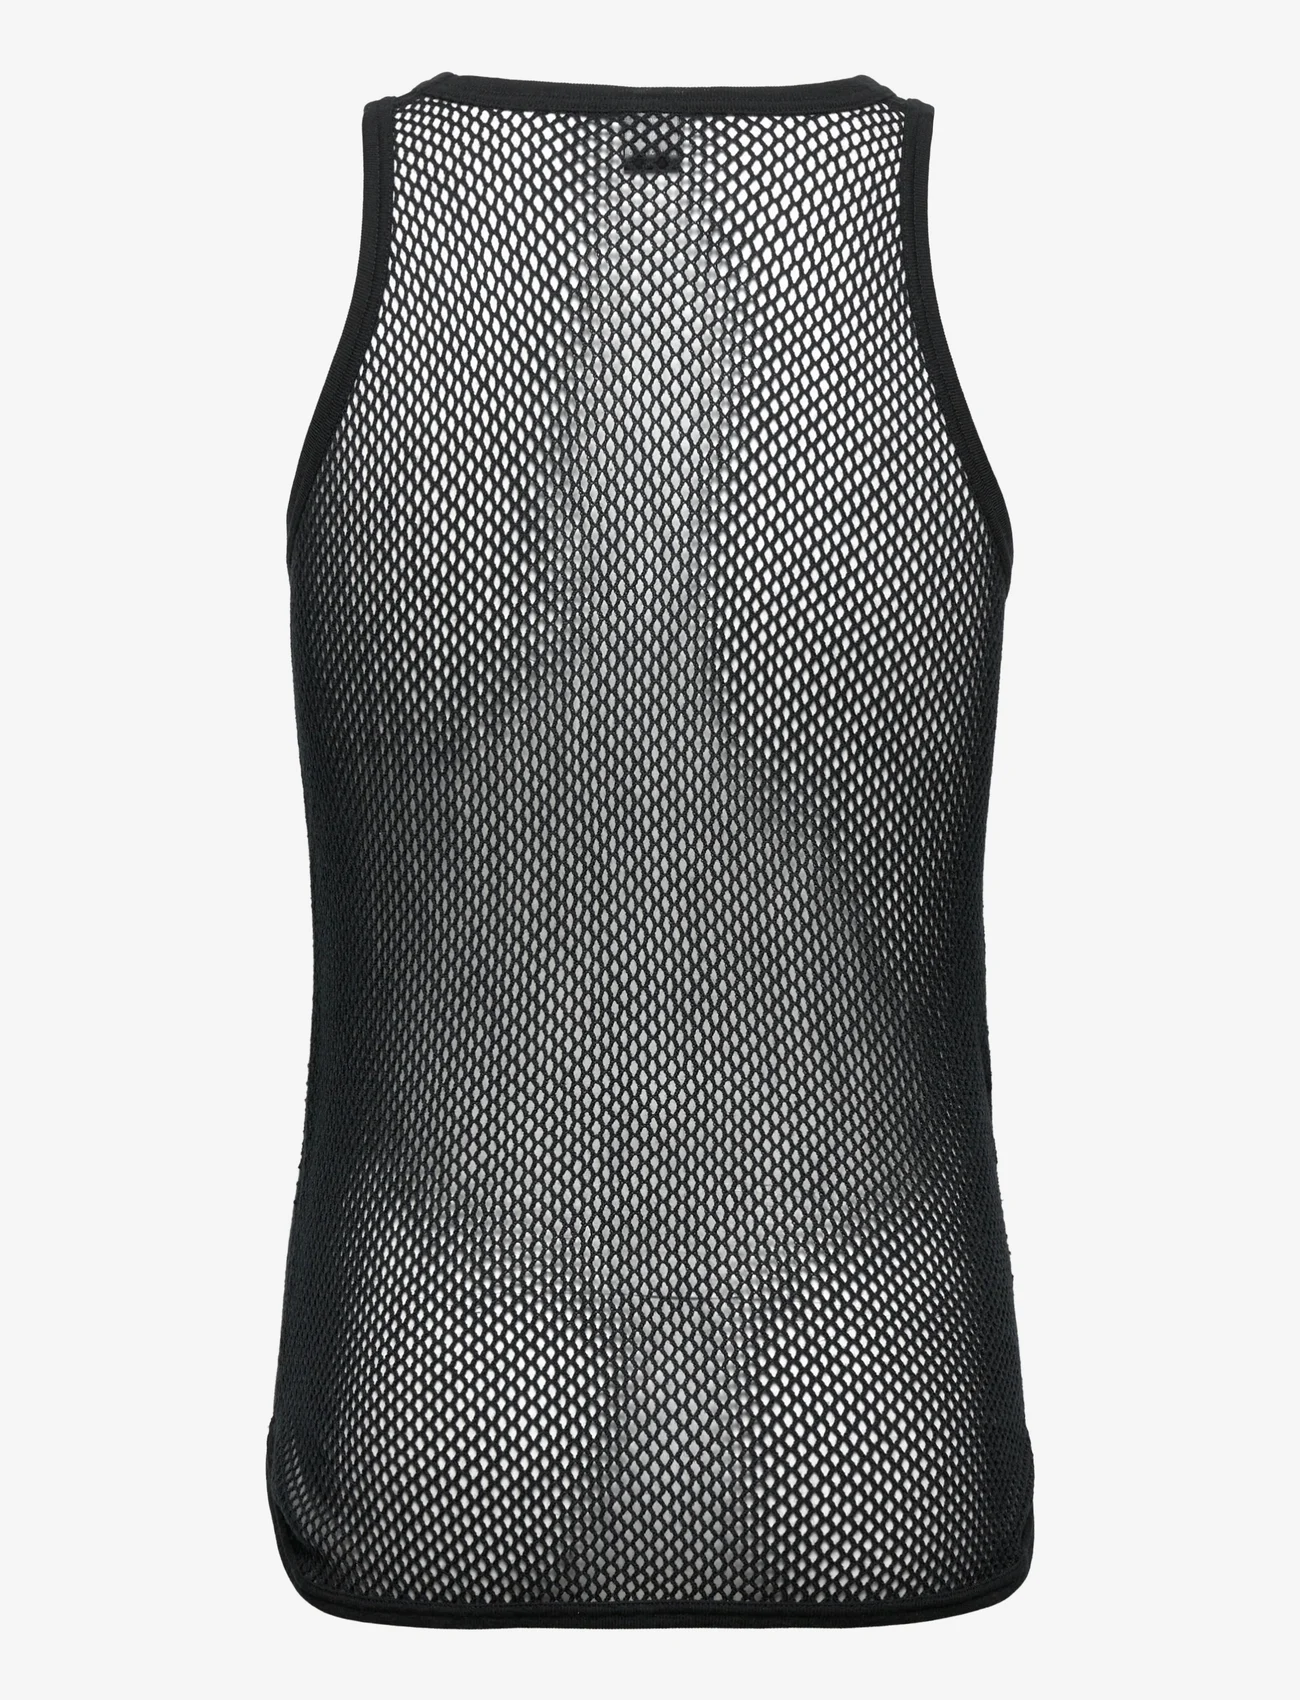 Dovre - DOVRE wool mesh tank top - pyjamasöverdelar - black - 1